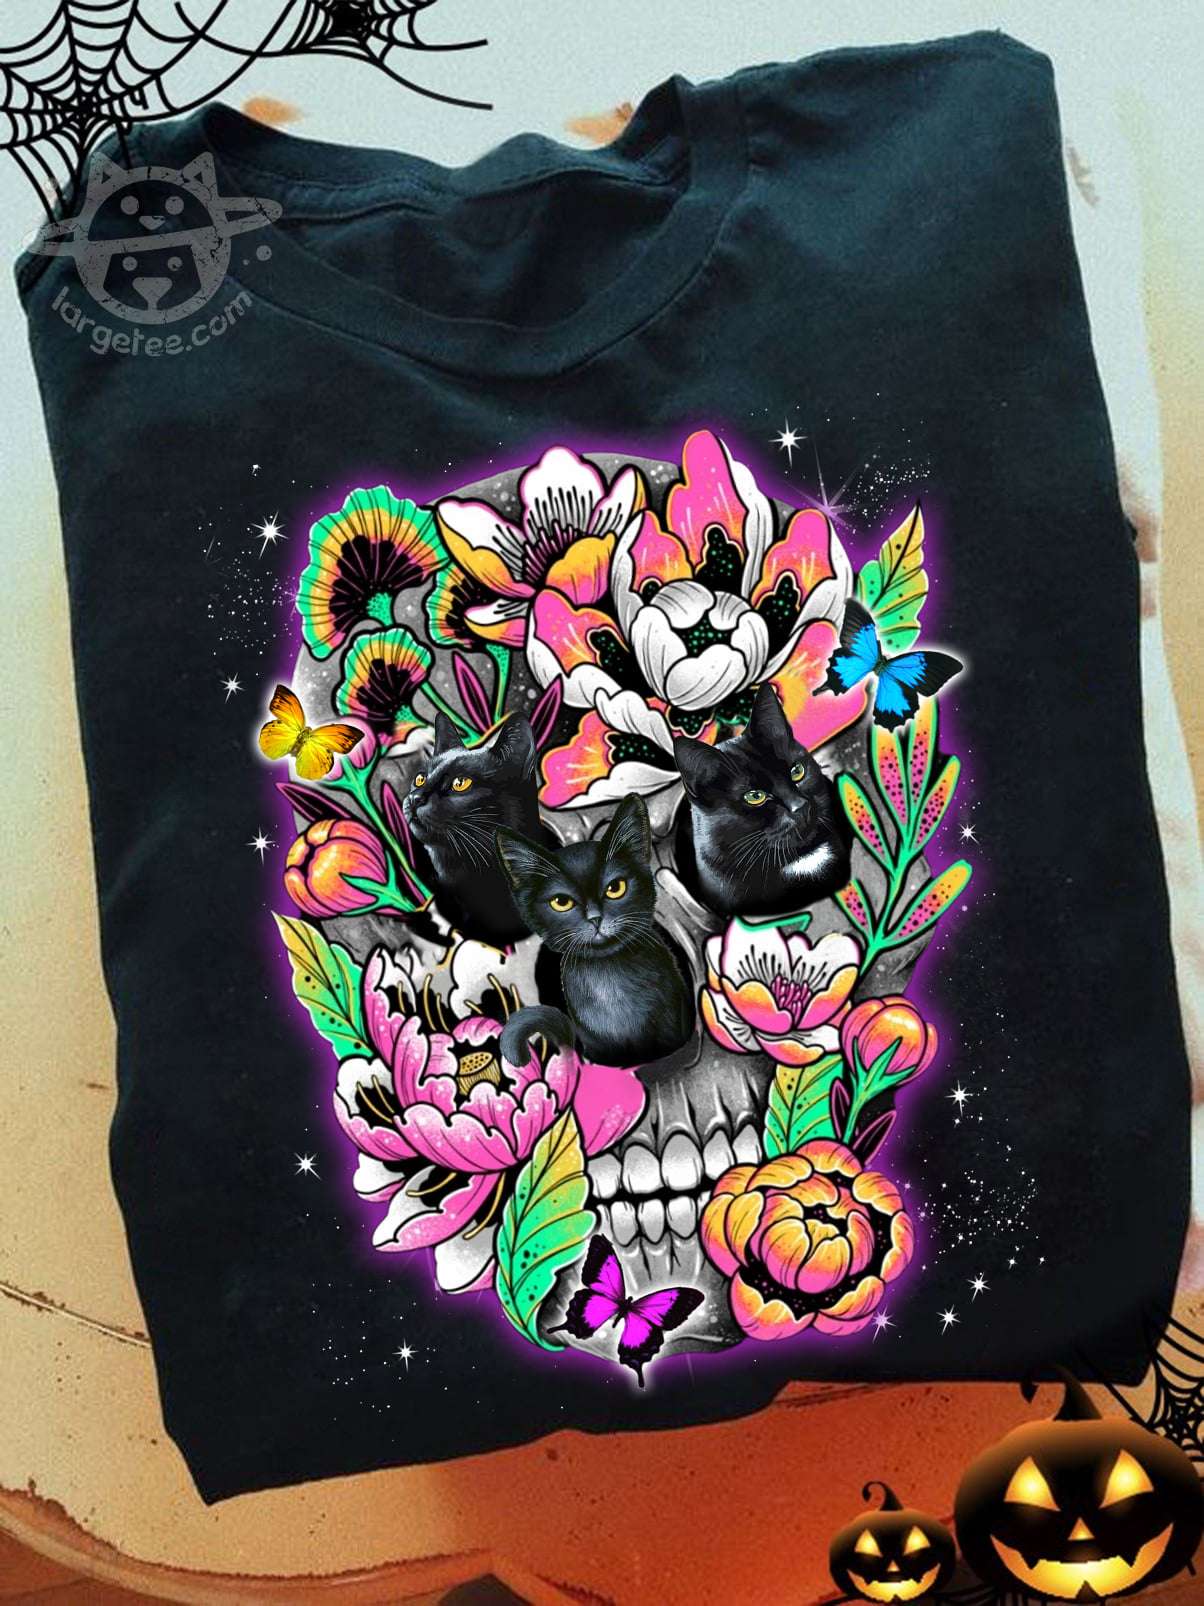 Floral skull black cat - T-shirt for cat person, flower in the skull